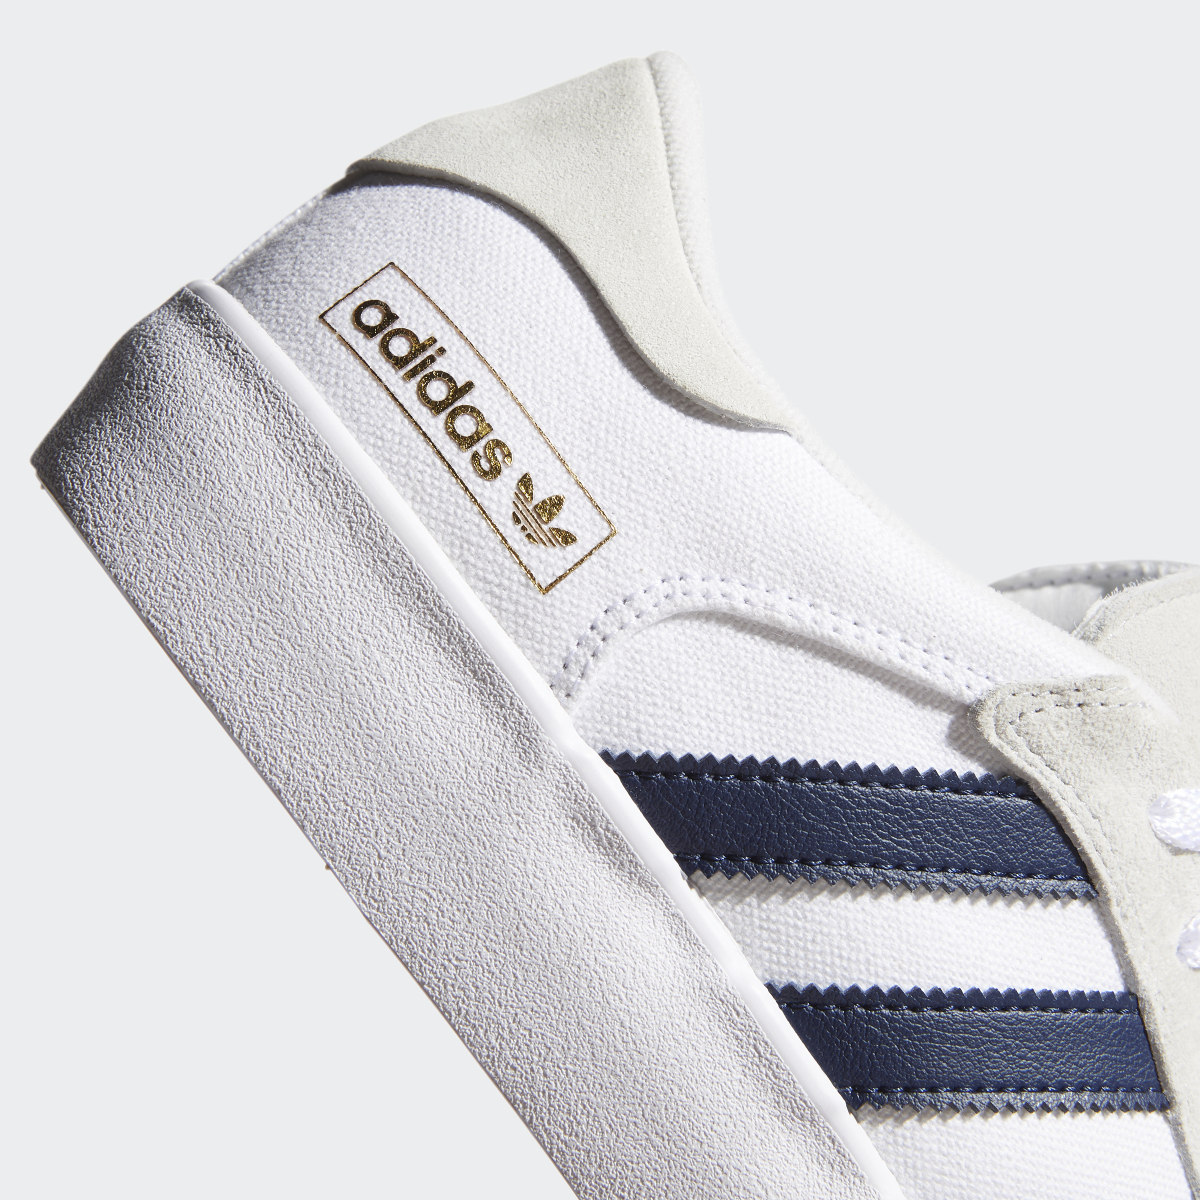 Adidas Matchbreak Super Schuh. 14